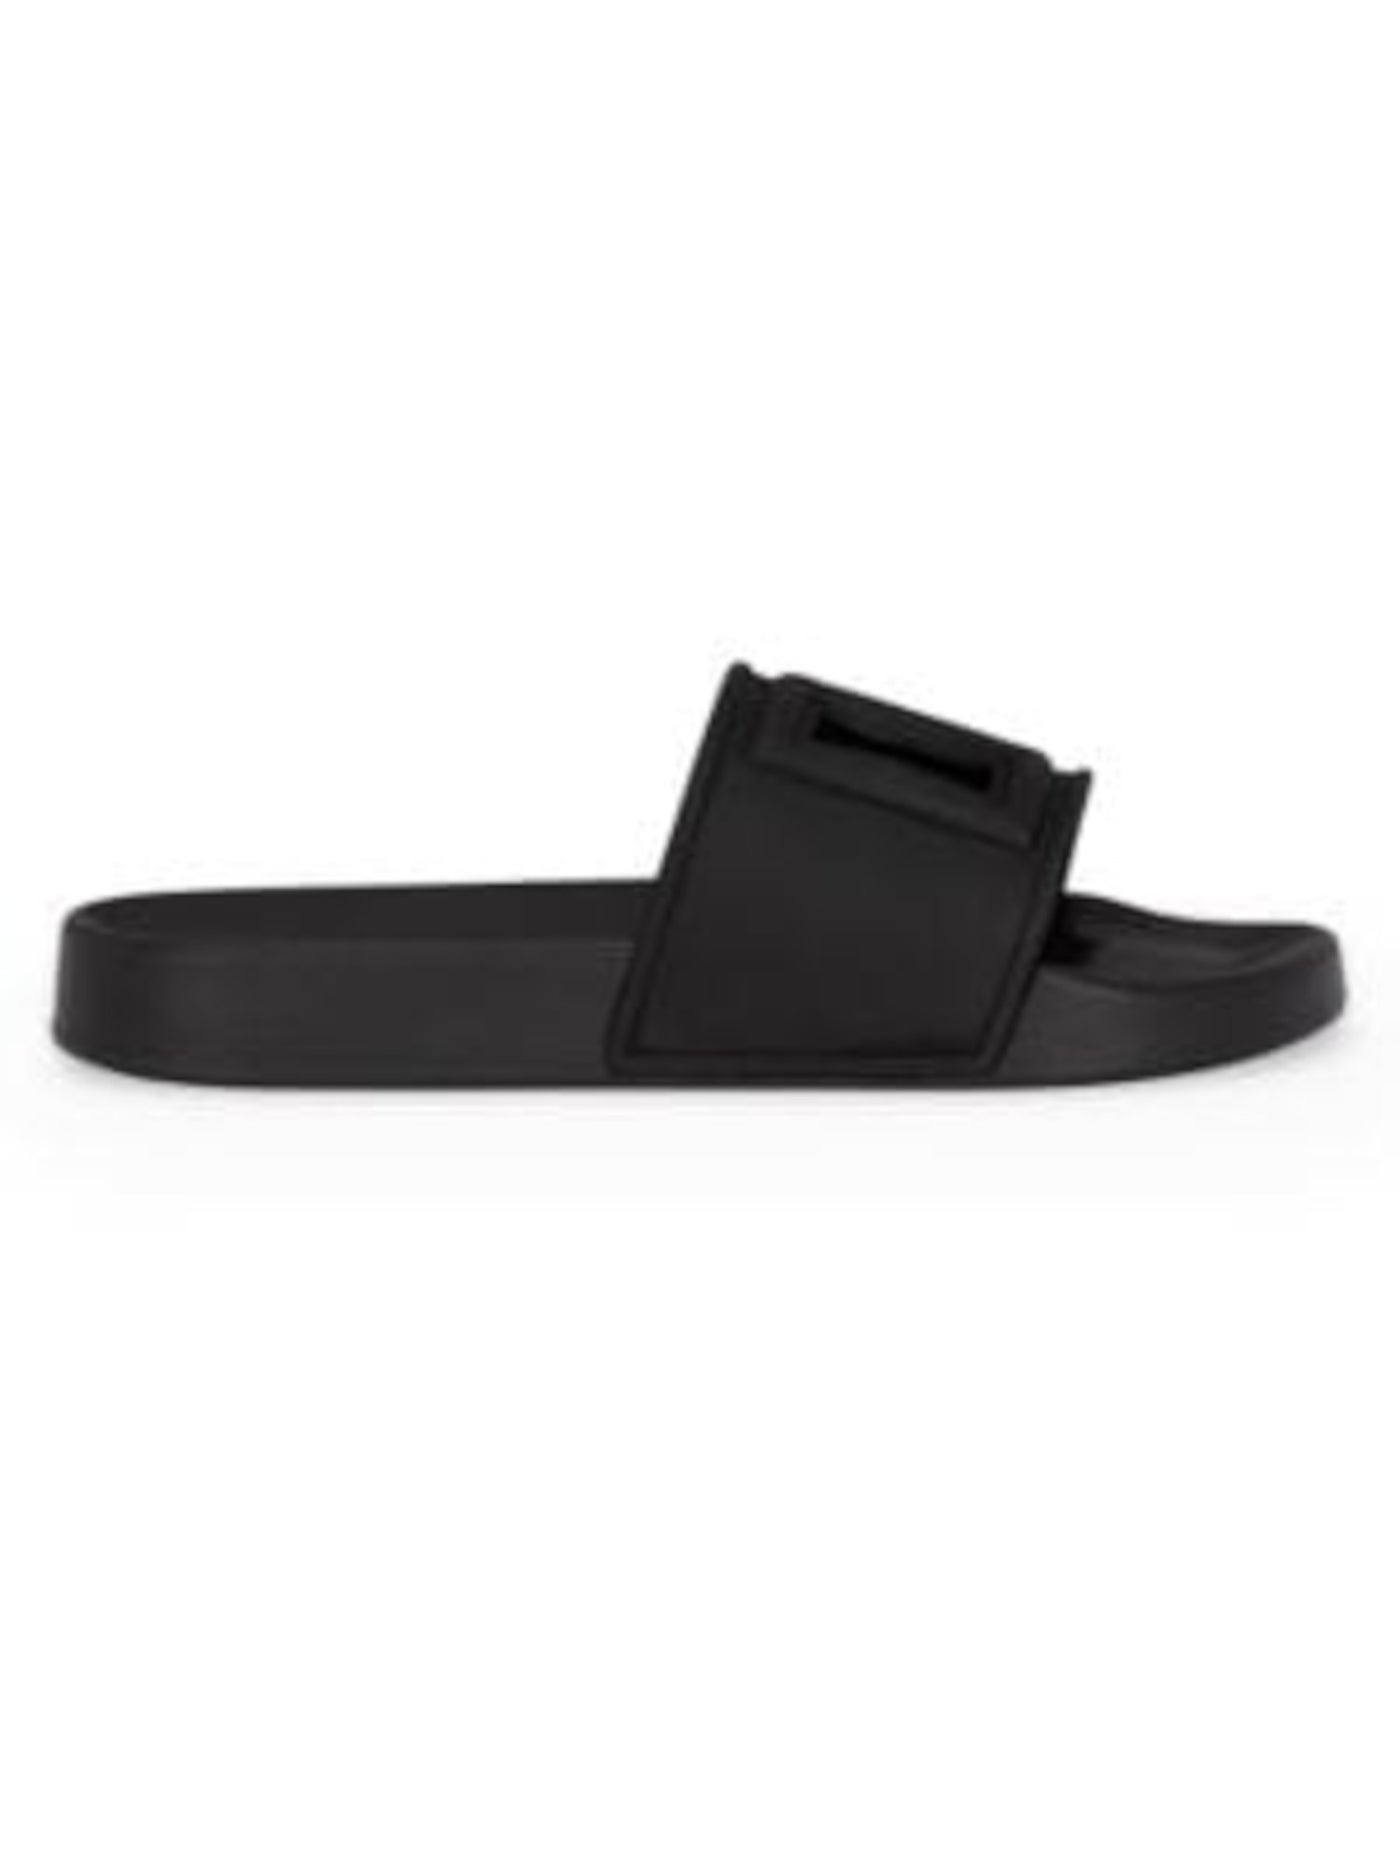 DOLCE & GABBANA Womens Black Cut Out Logo 20223 Round Toe Platform Slip On Slide Sandals Shoes 38